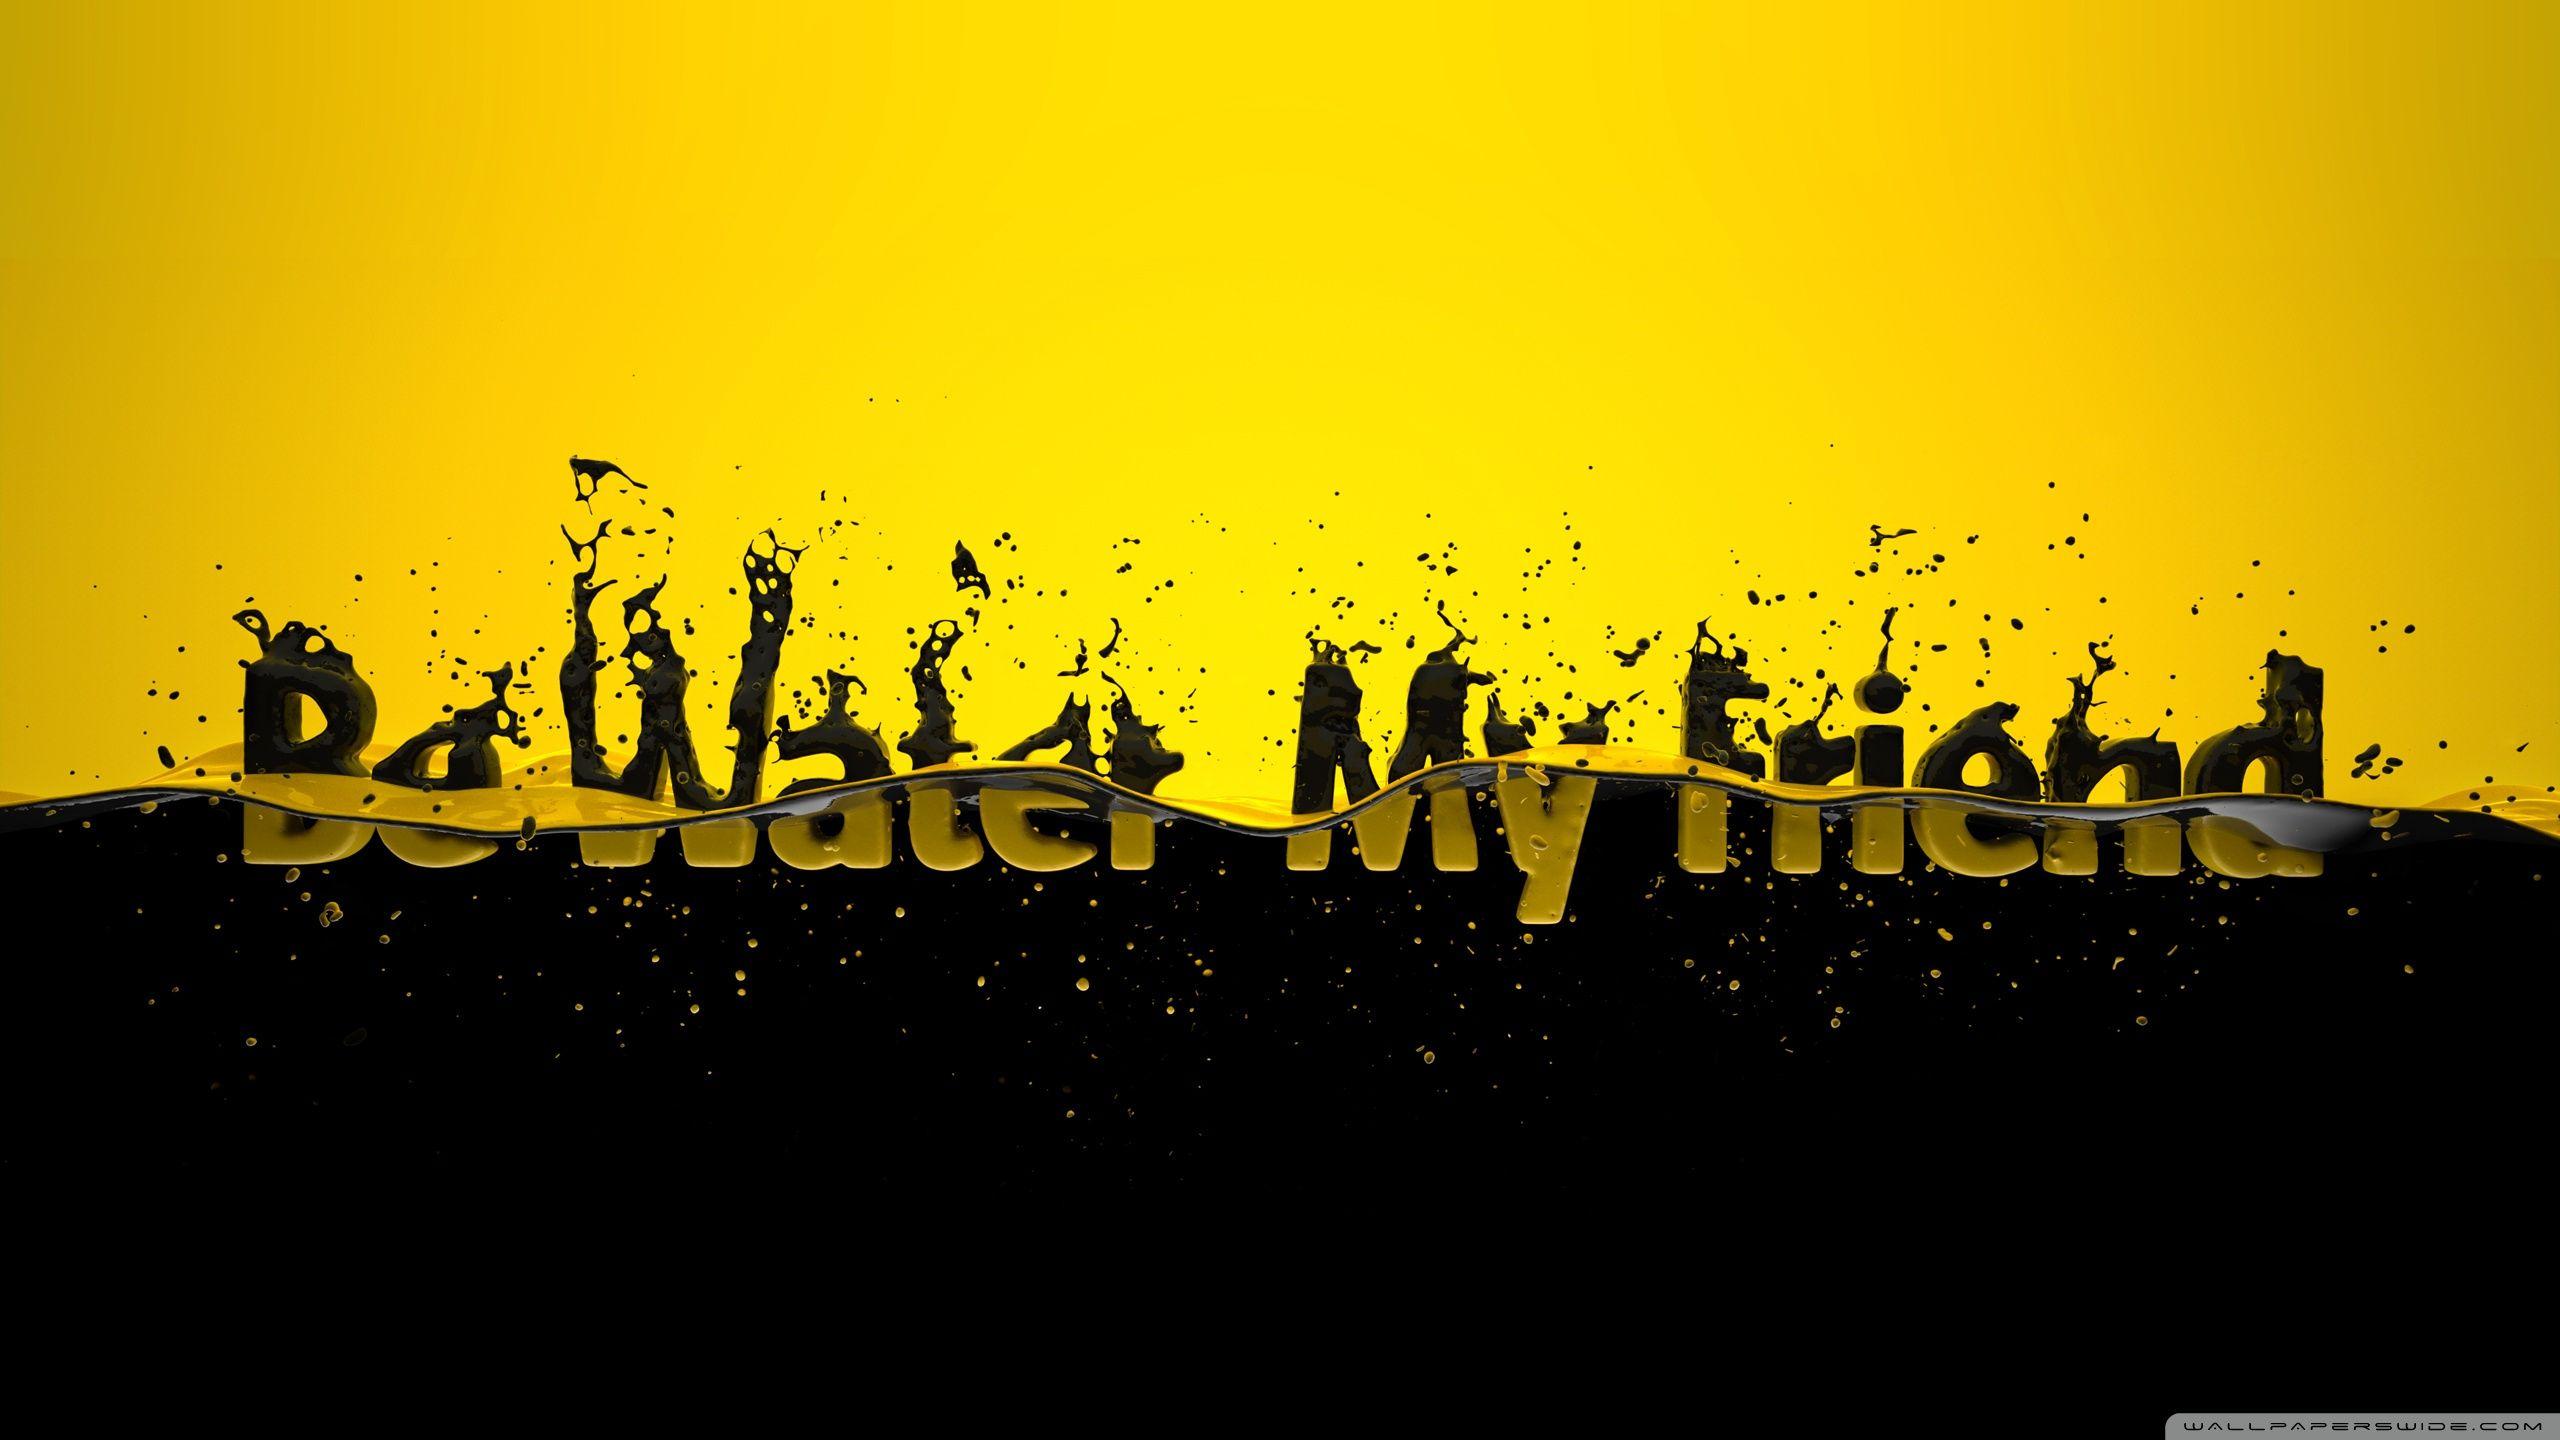 Black Yellow Background Images  Free Download on Freepik